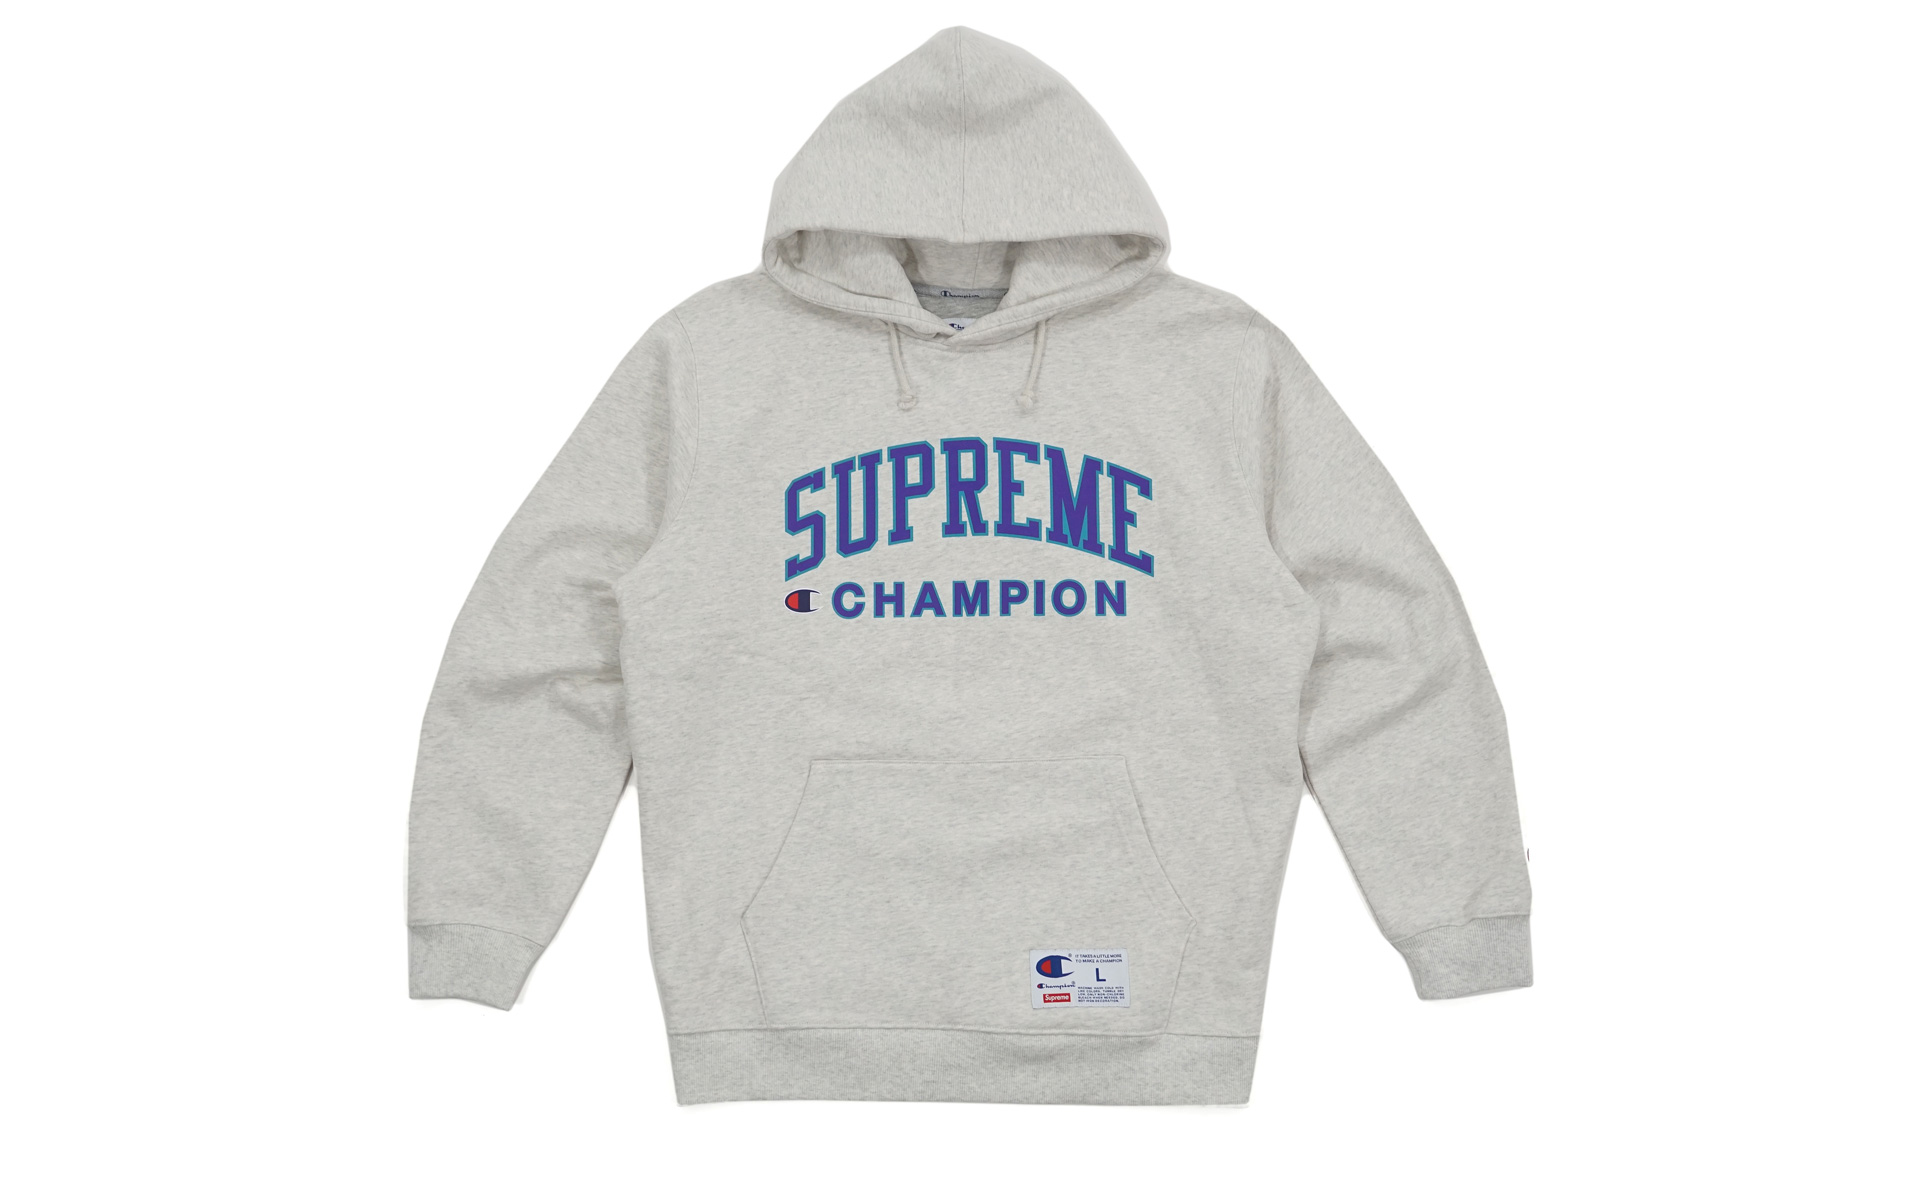 Champion Supreme Hoodies Online 1695218552